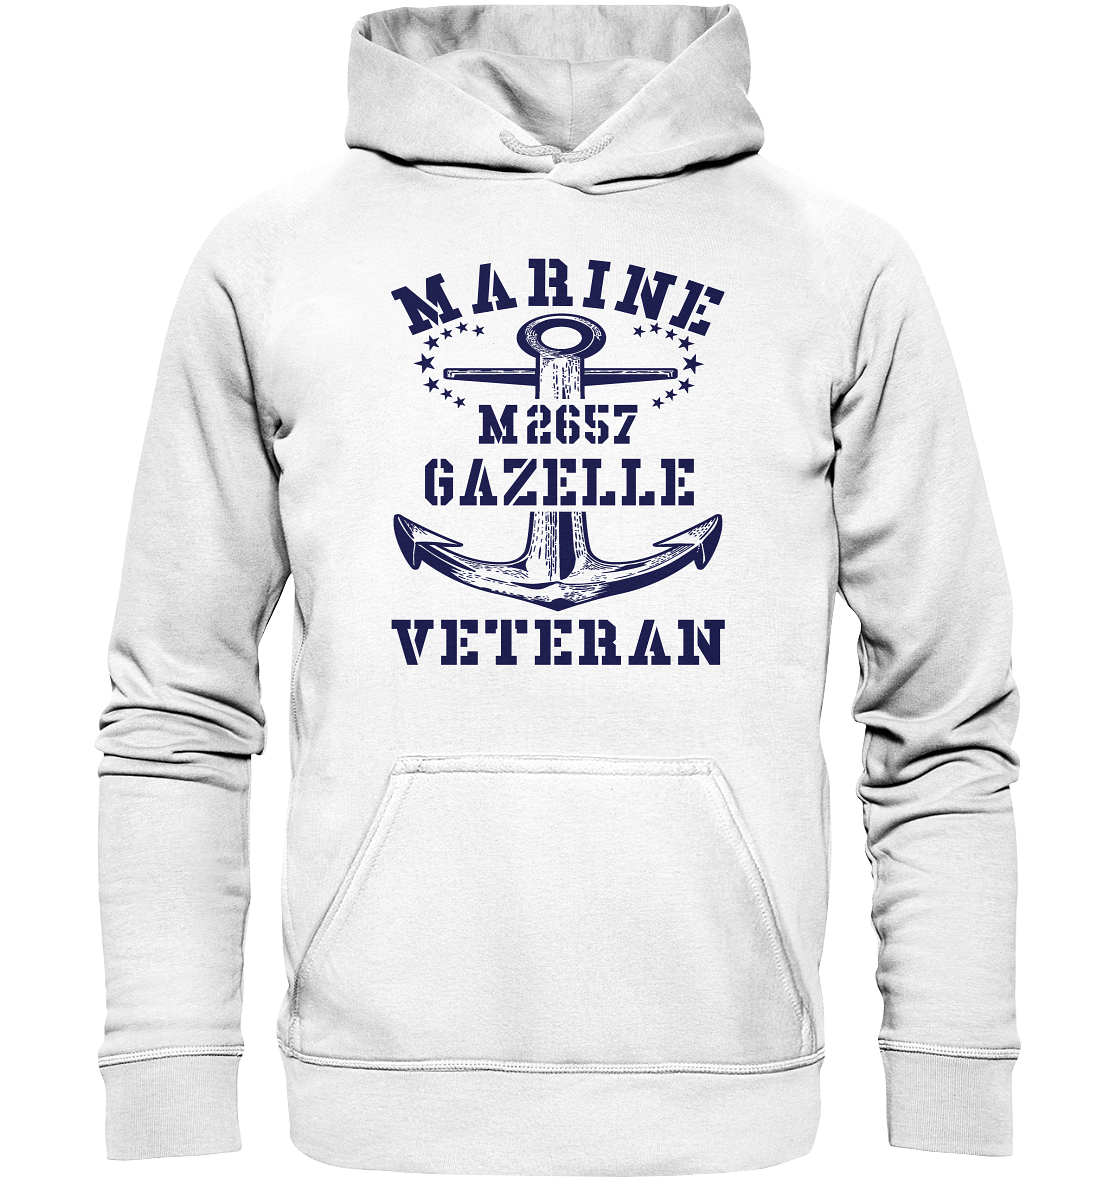 BiMi M2657 GAZELLE Marine Veteran - Basic Unisex Hoodie